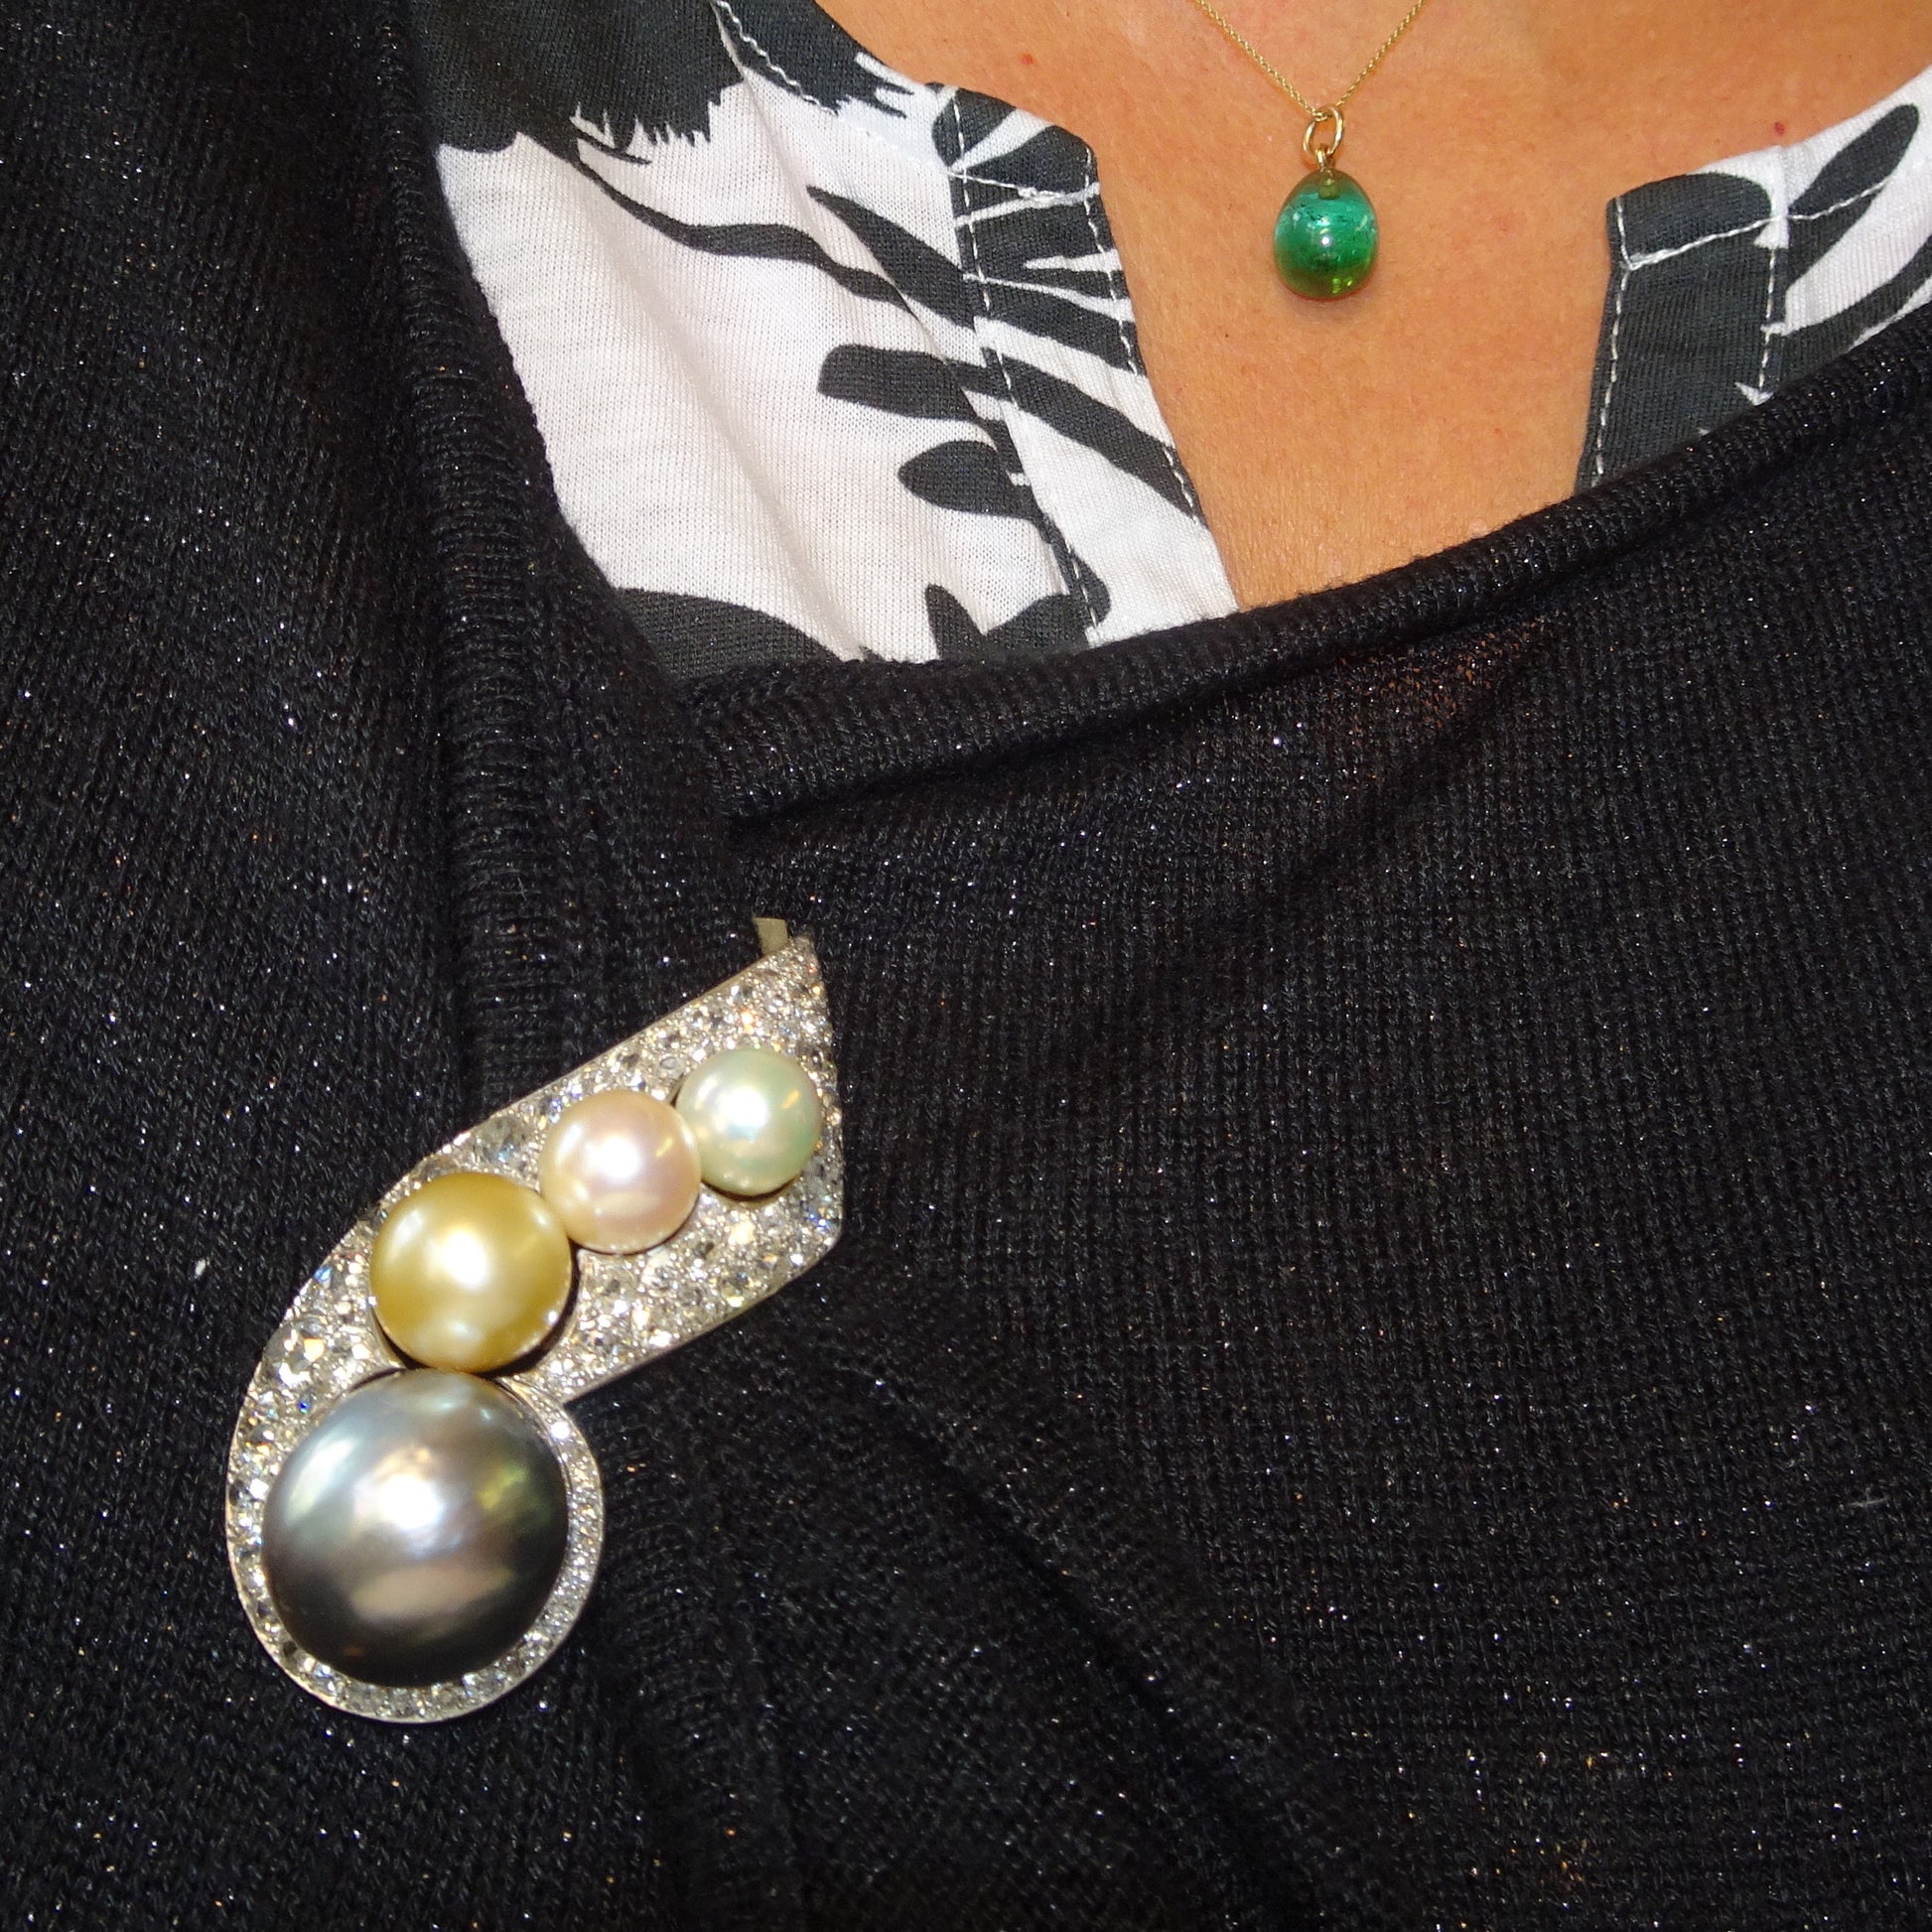 Rene Boivin 1940s Platinum Diamond & Cultured Pearl Brooch worn on shirt